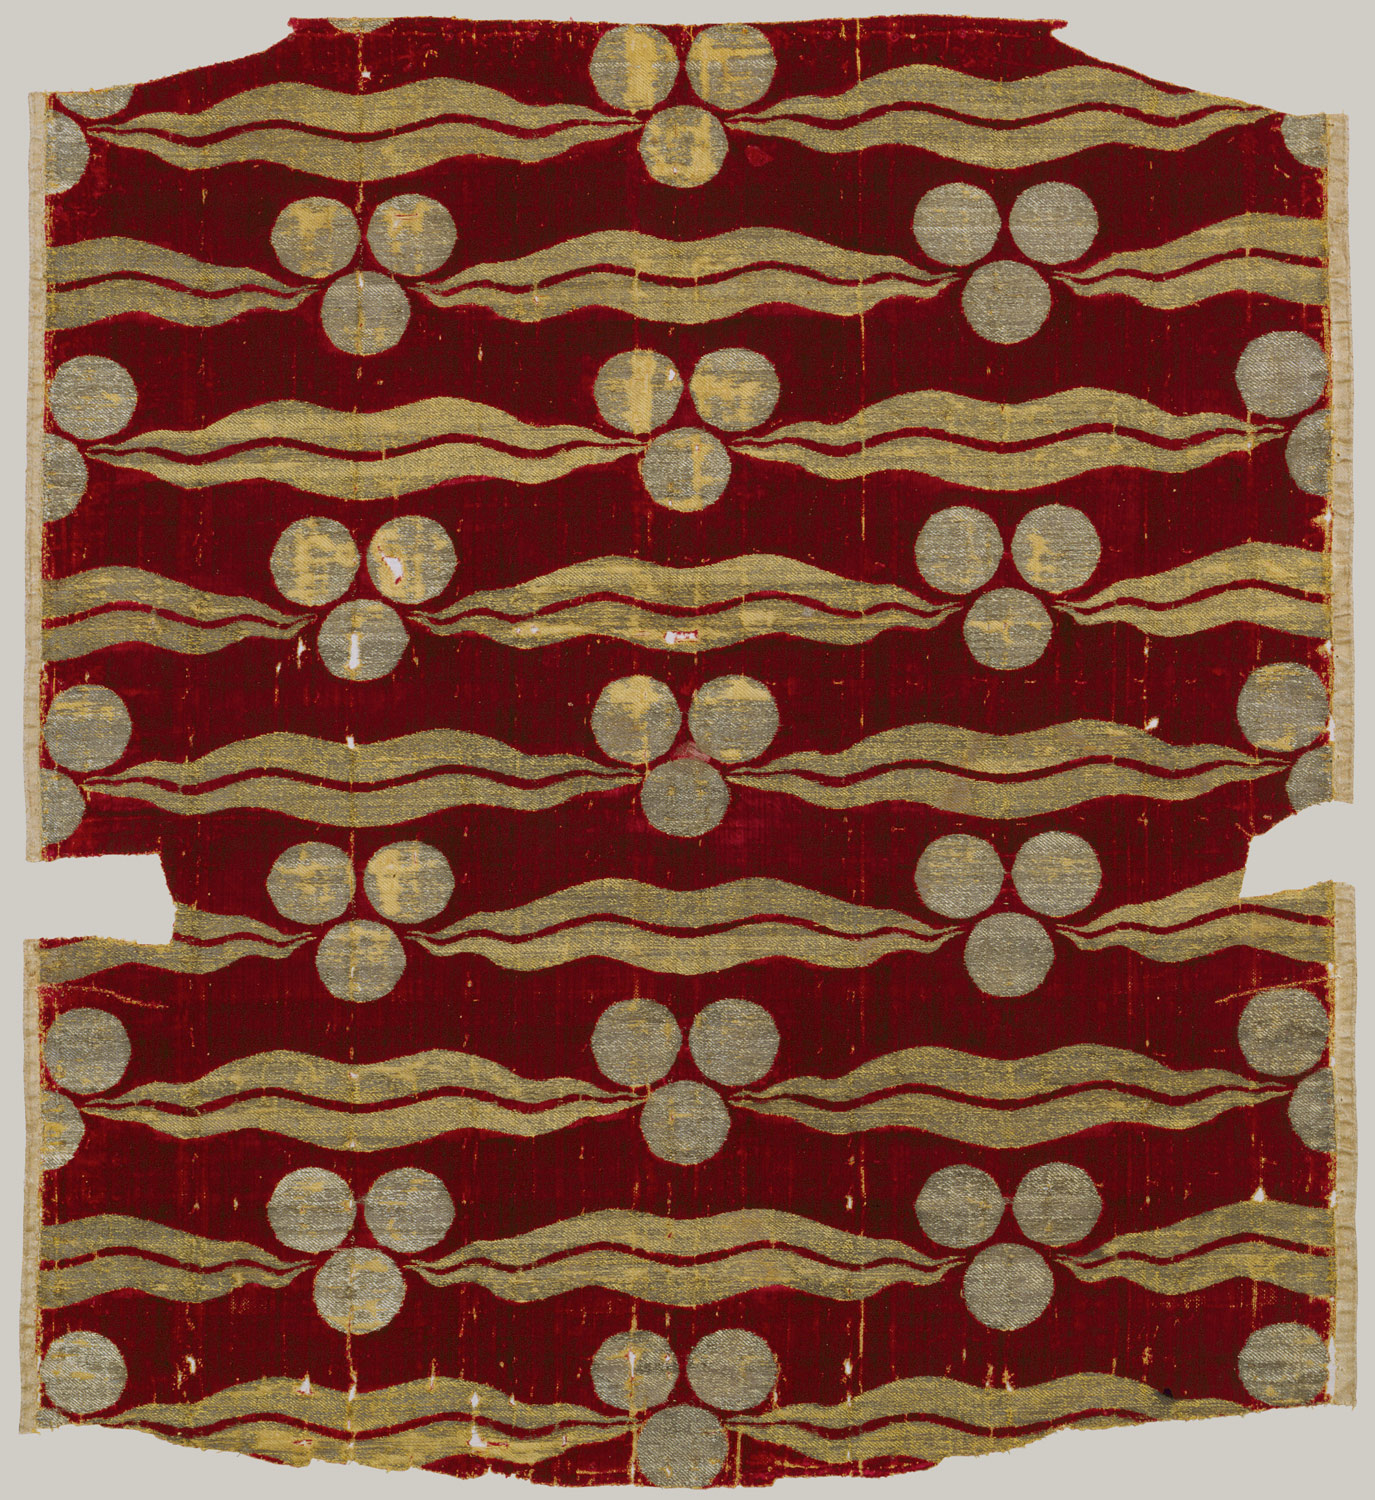 Ottoman Embroidery Patterns Silks From Ottoman Turkey Essay Heilbrunn Timeline Of Art